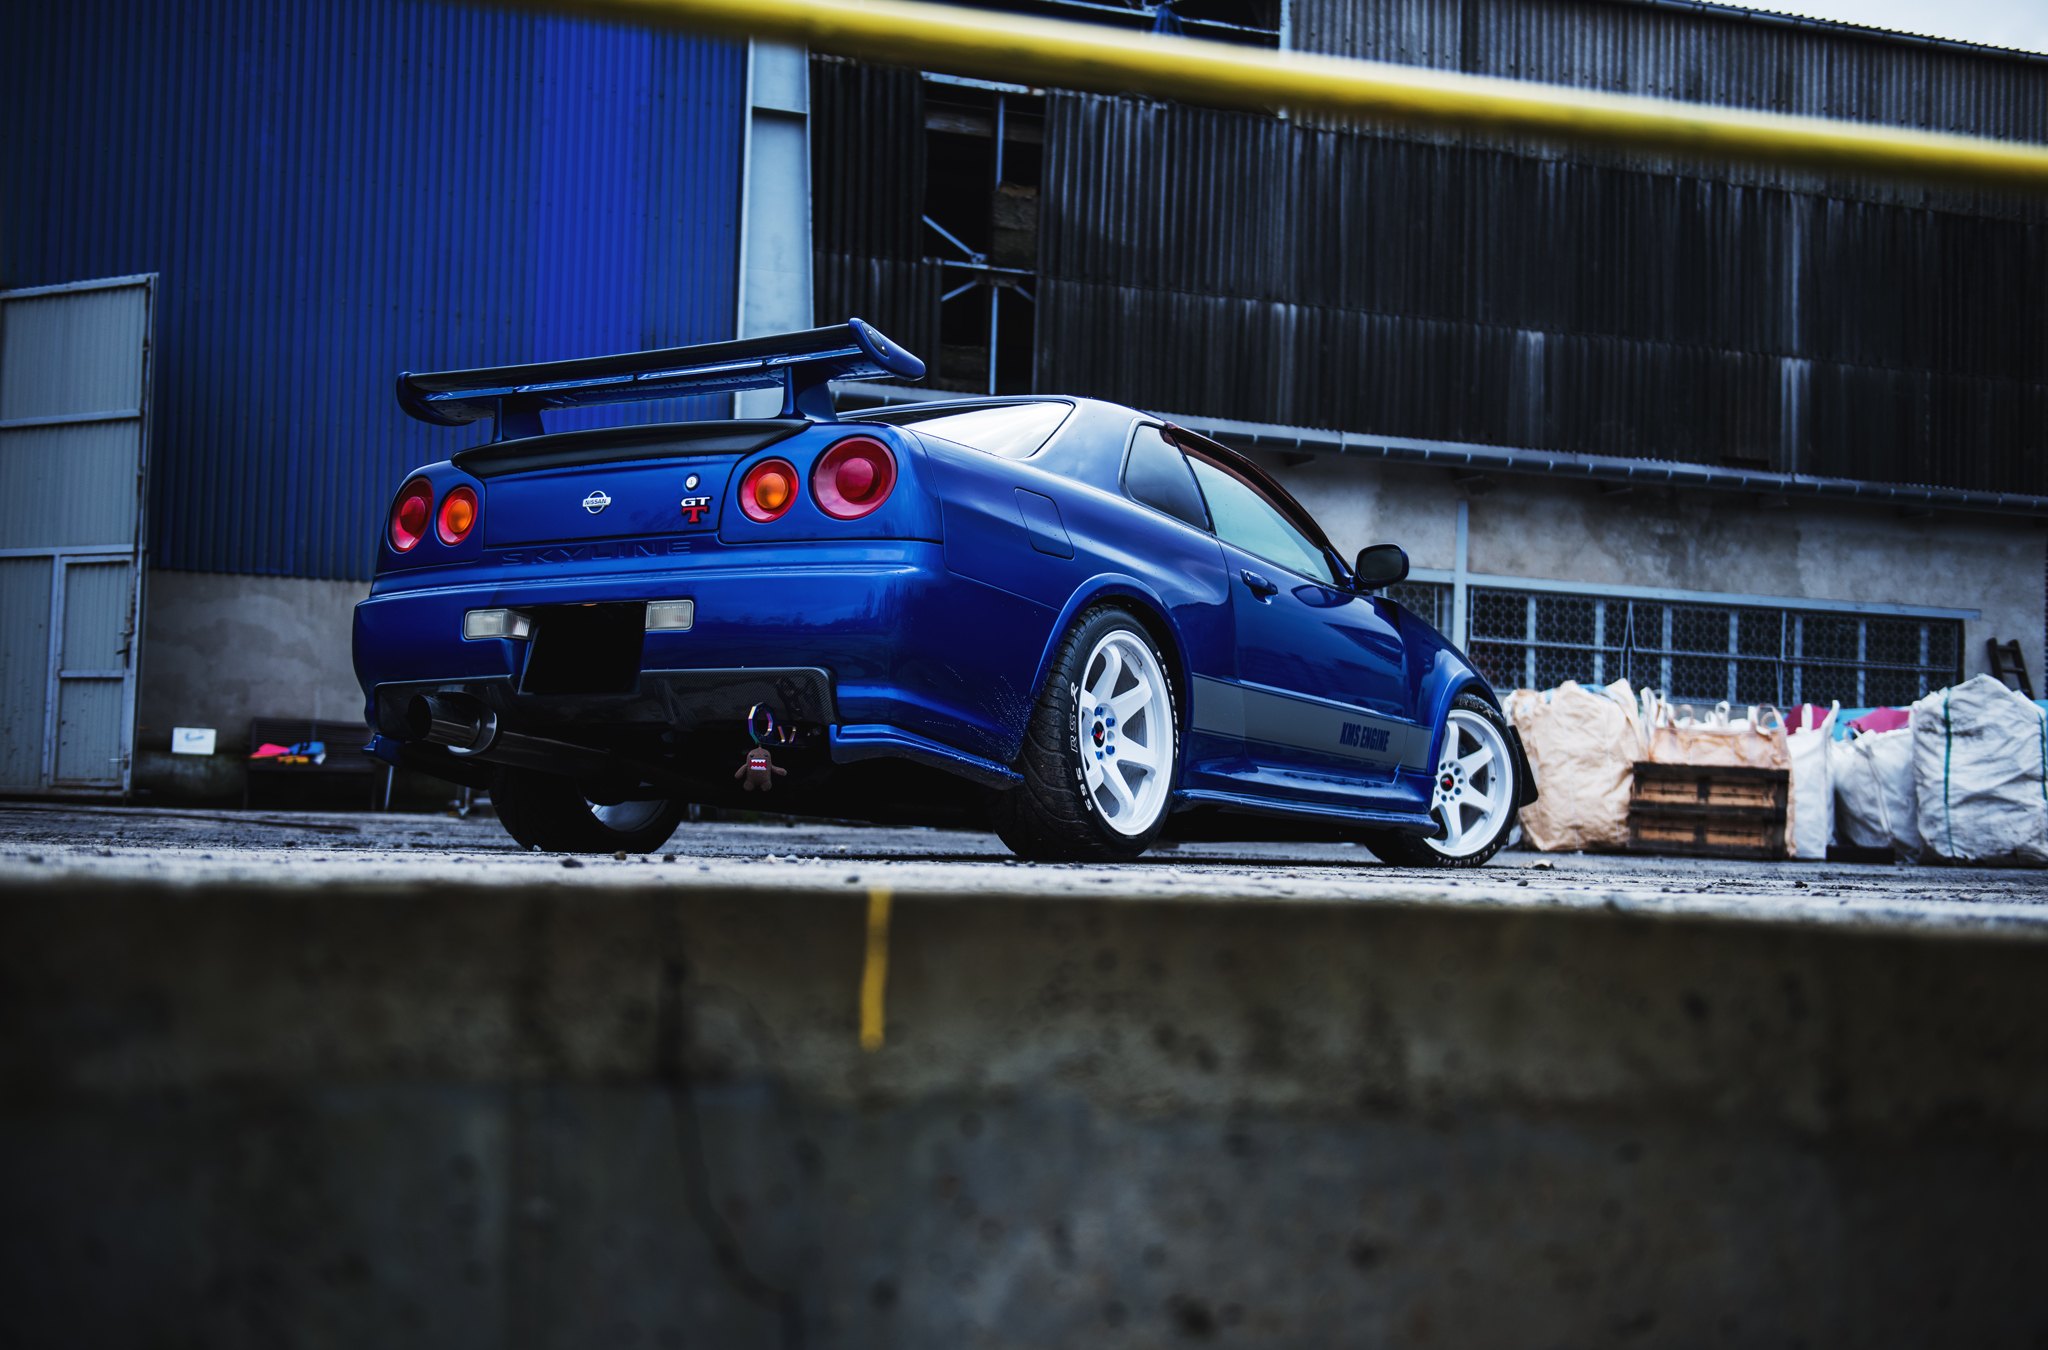 Large Wing Spoiler on Blue Nissan Skyline - Photo by JR Wheels